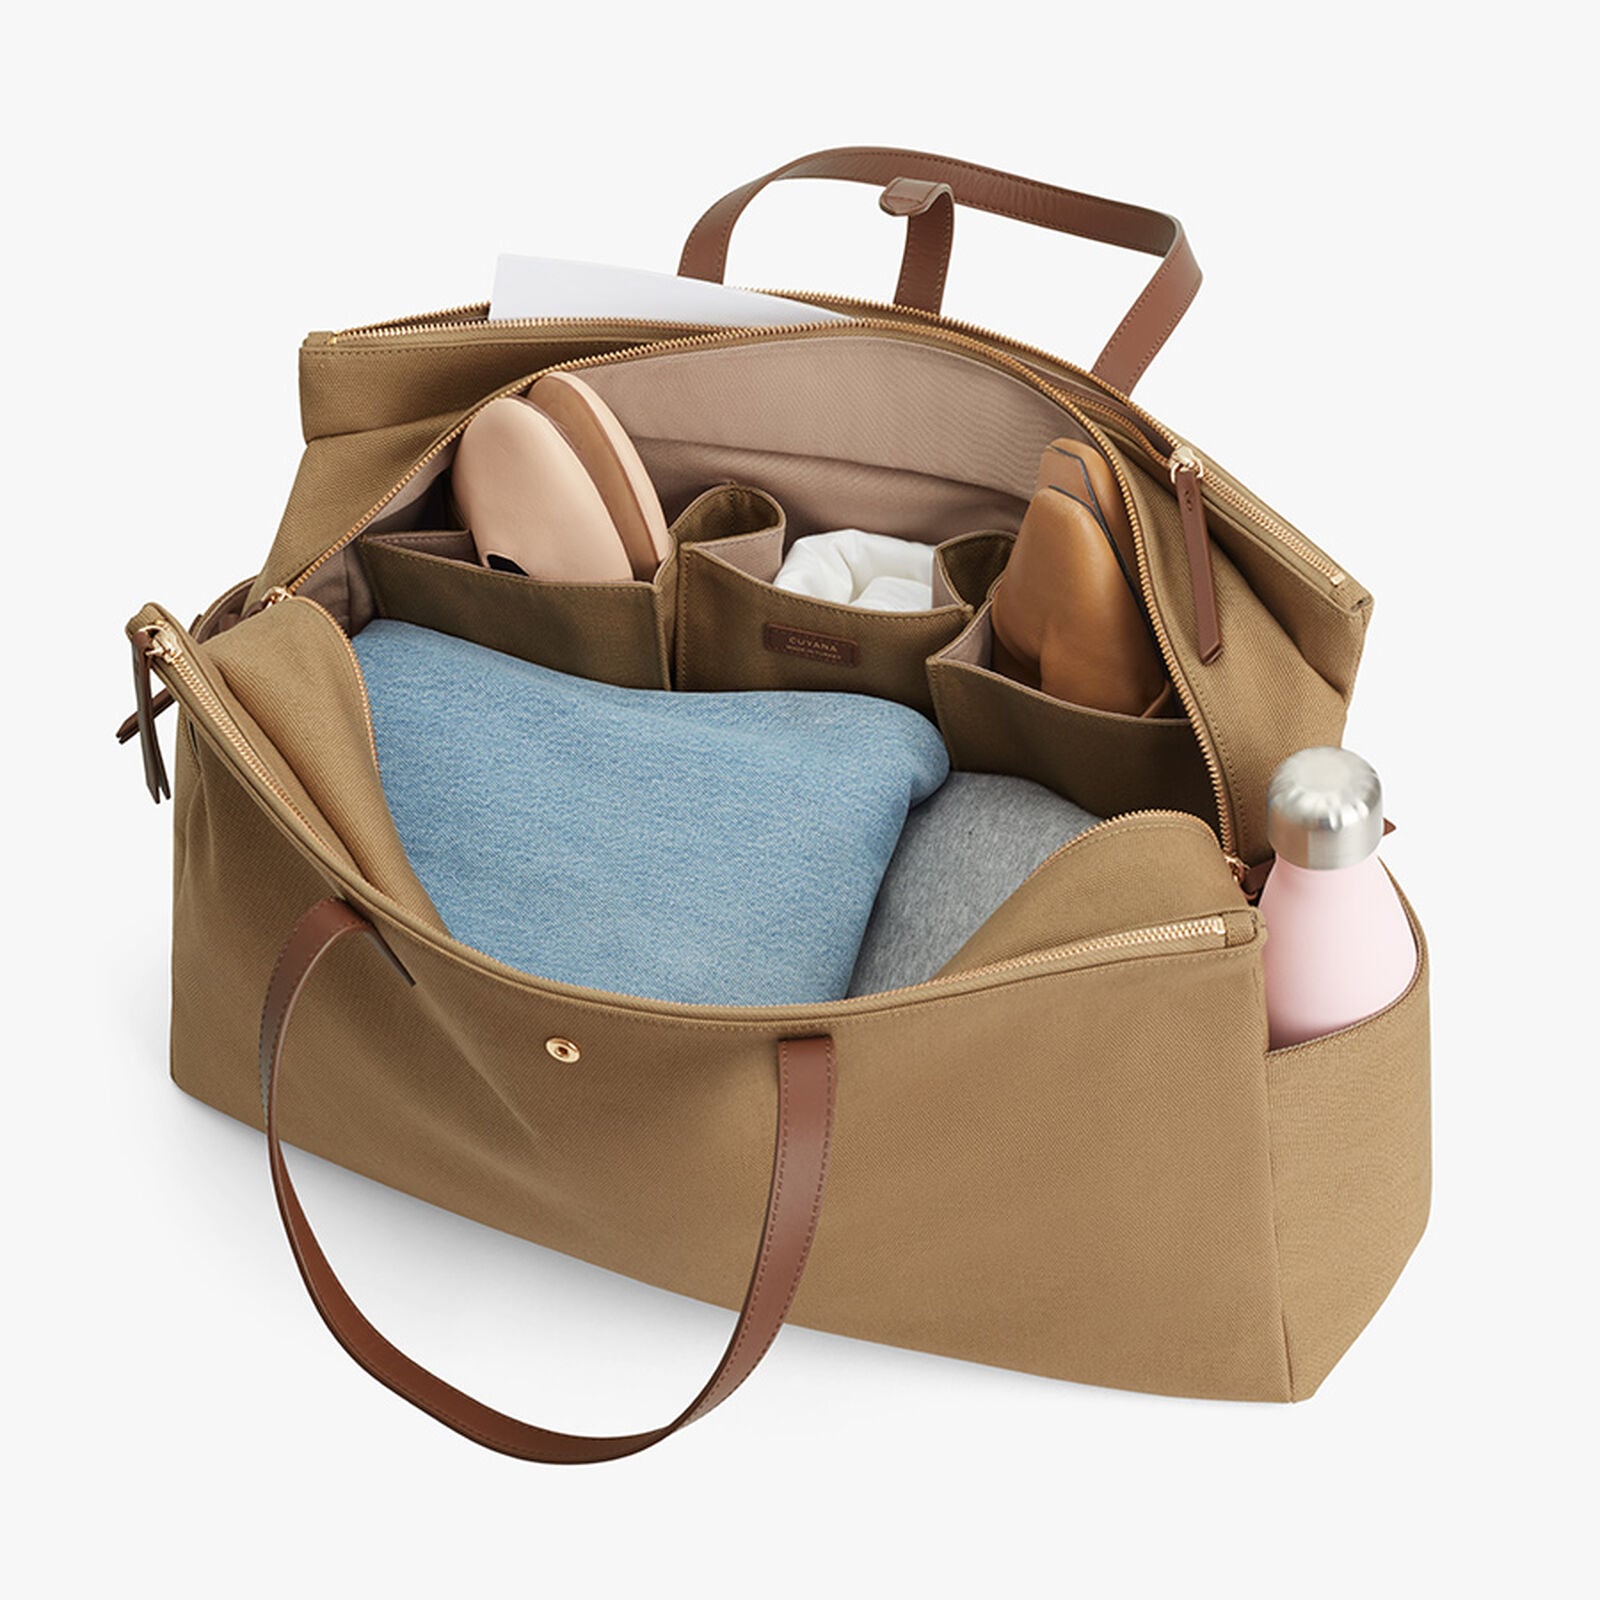 20 Best Weekender Bags in 2023—Overnight Bags for Women